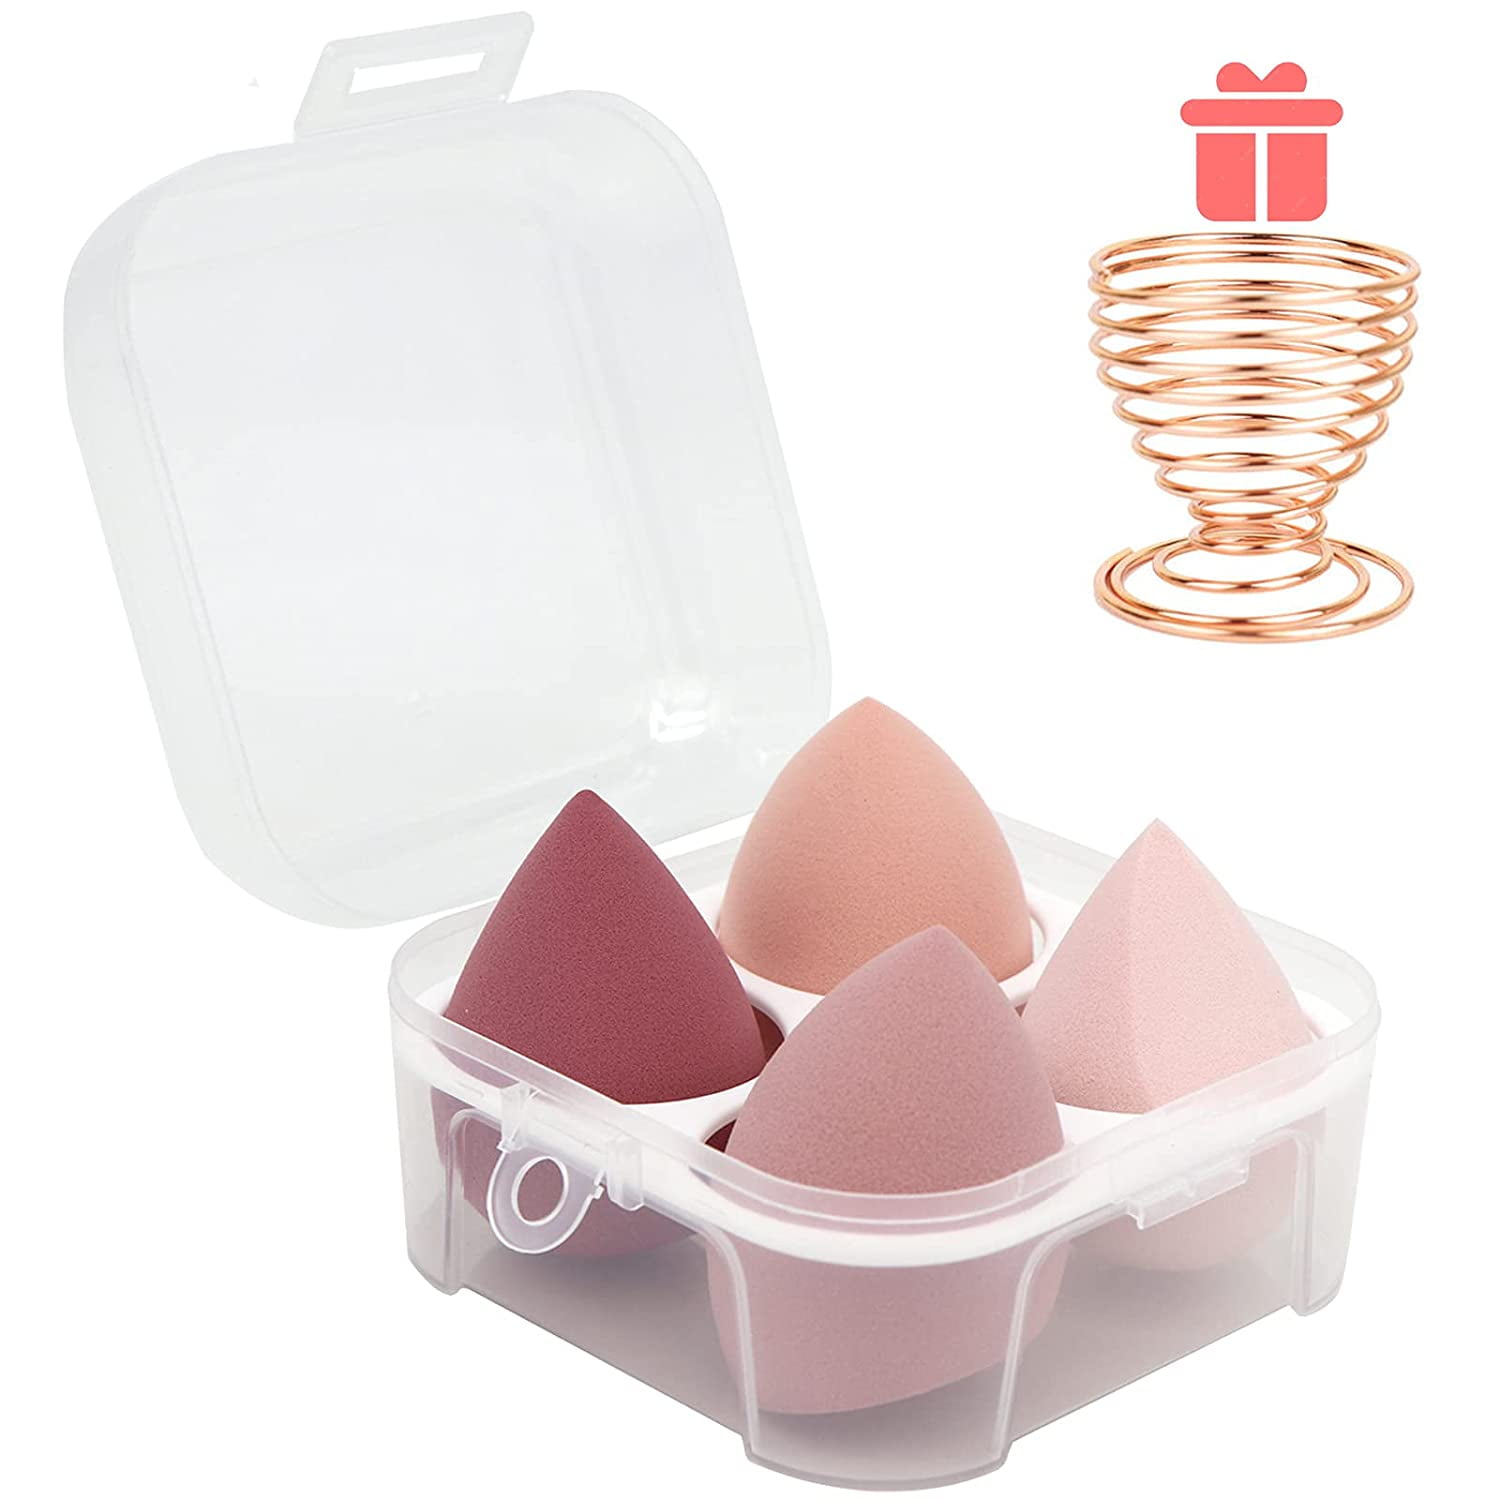 COSTICA Makeup Sponge Set Blender, Beauty Sponge Makeup Blender Flawless  for Liquid - Multi Colored 4 pcs Rose Series